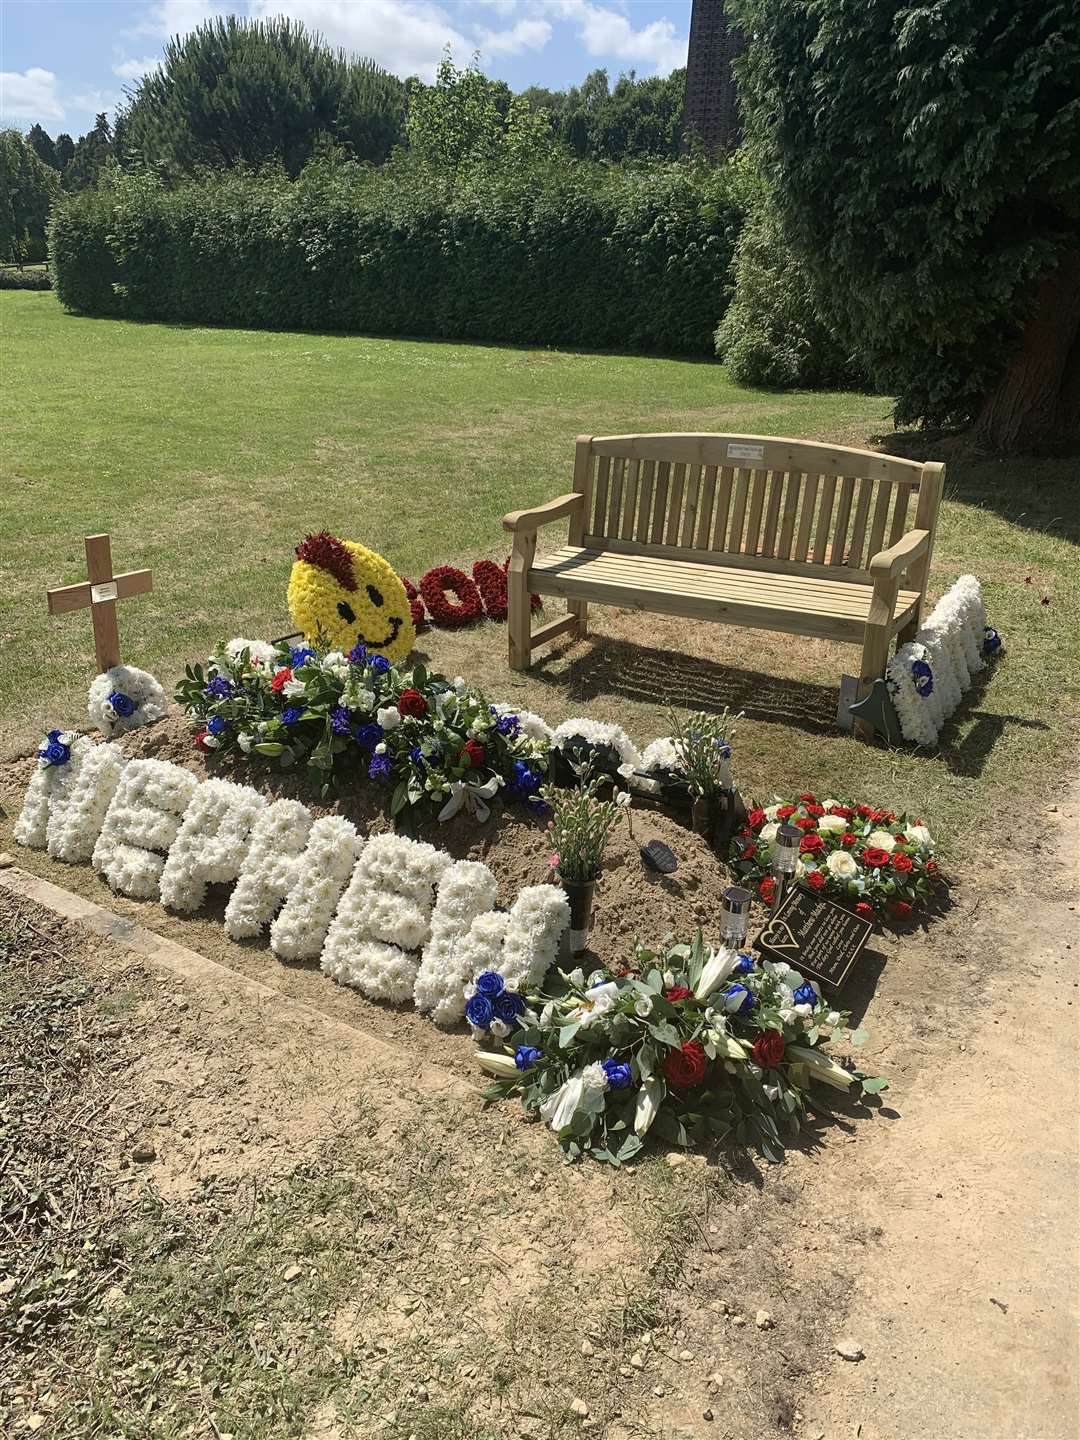 Matthew was laid to rest last June